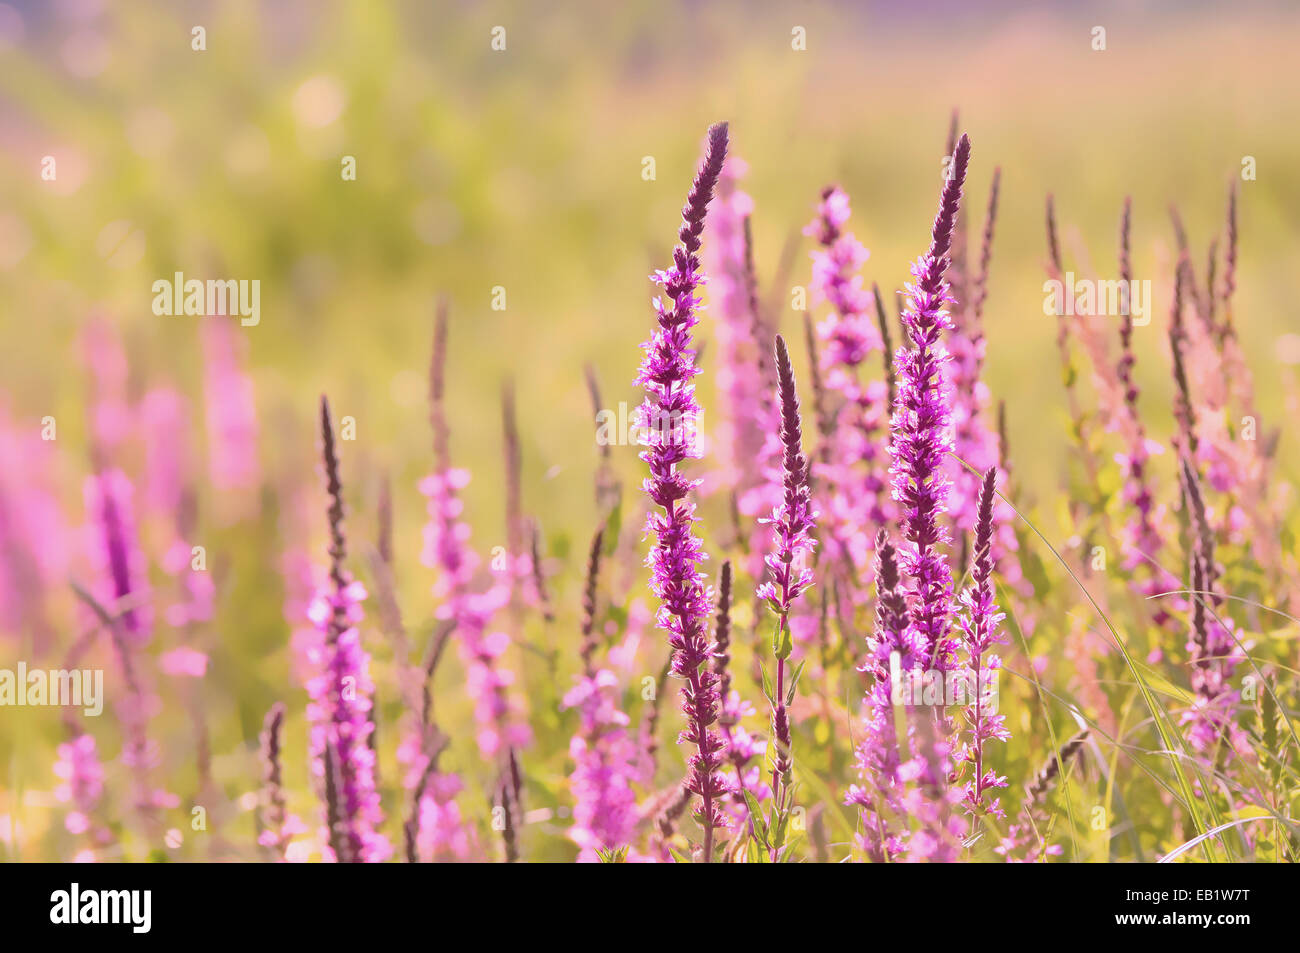 Nature background - purple flowers Stock Photo